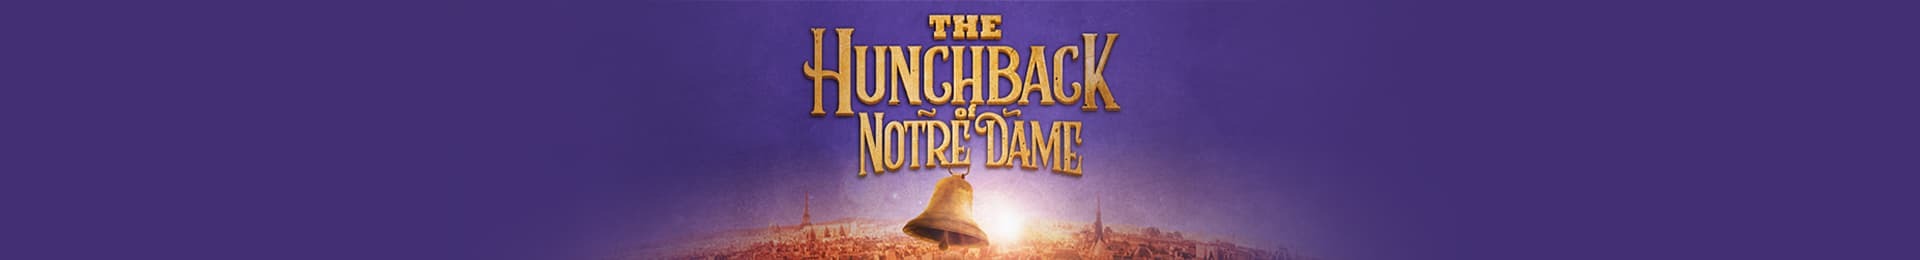 The Hunchback of Notre Dame banner image